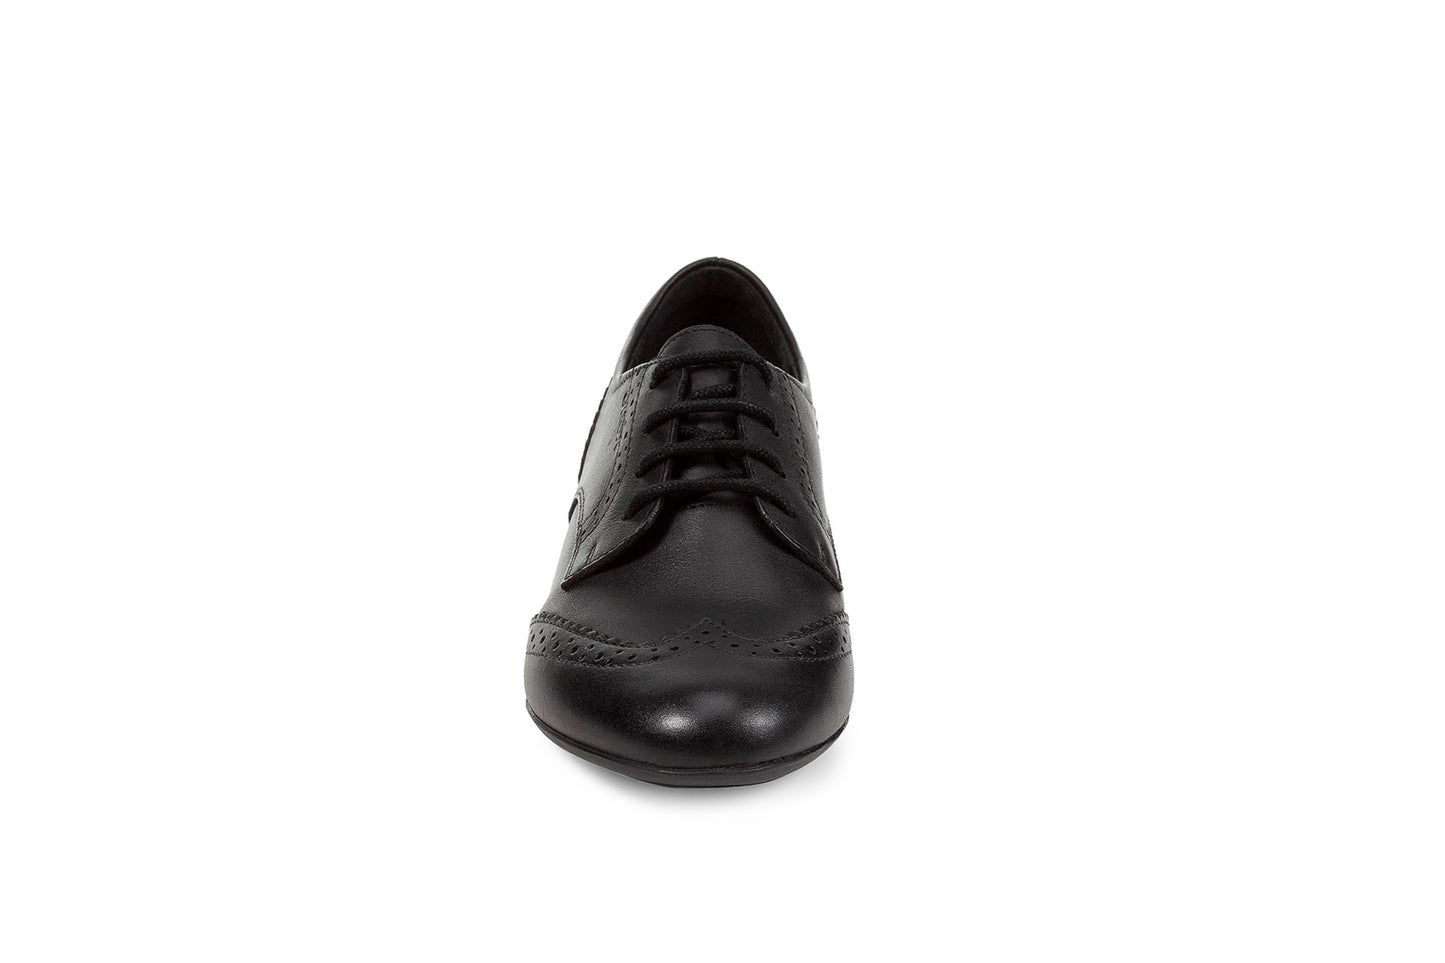 Plie Black Leather Lace-up Brogue Girl's School Shoe